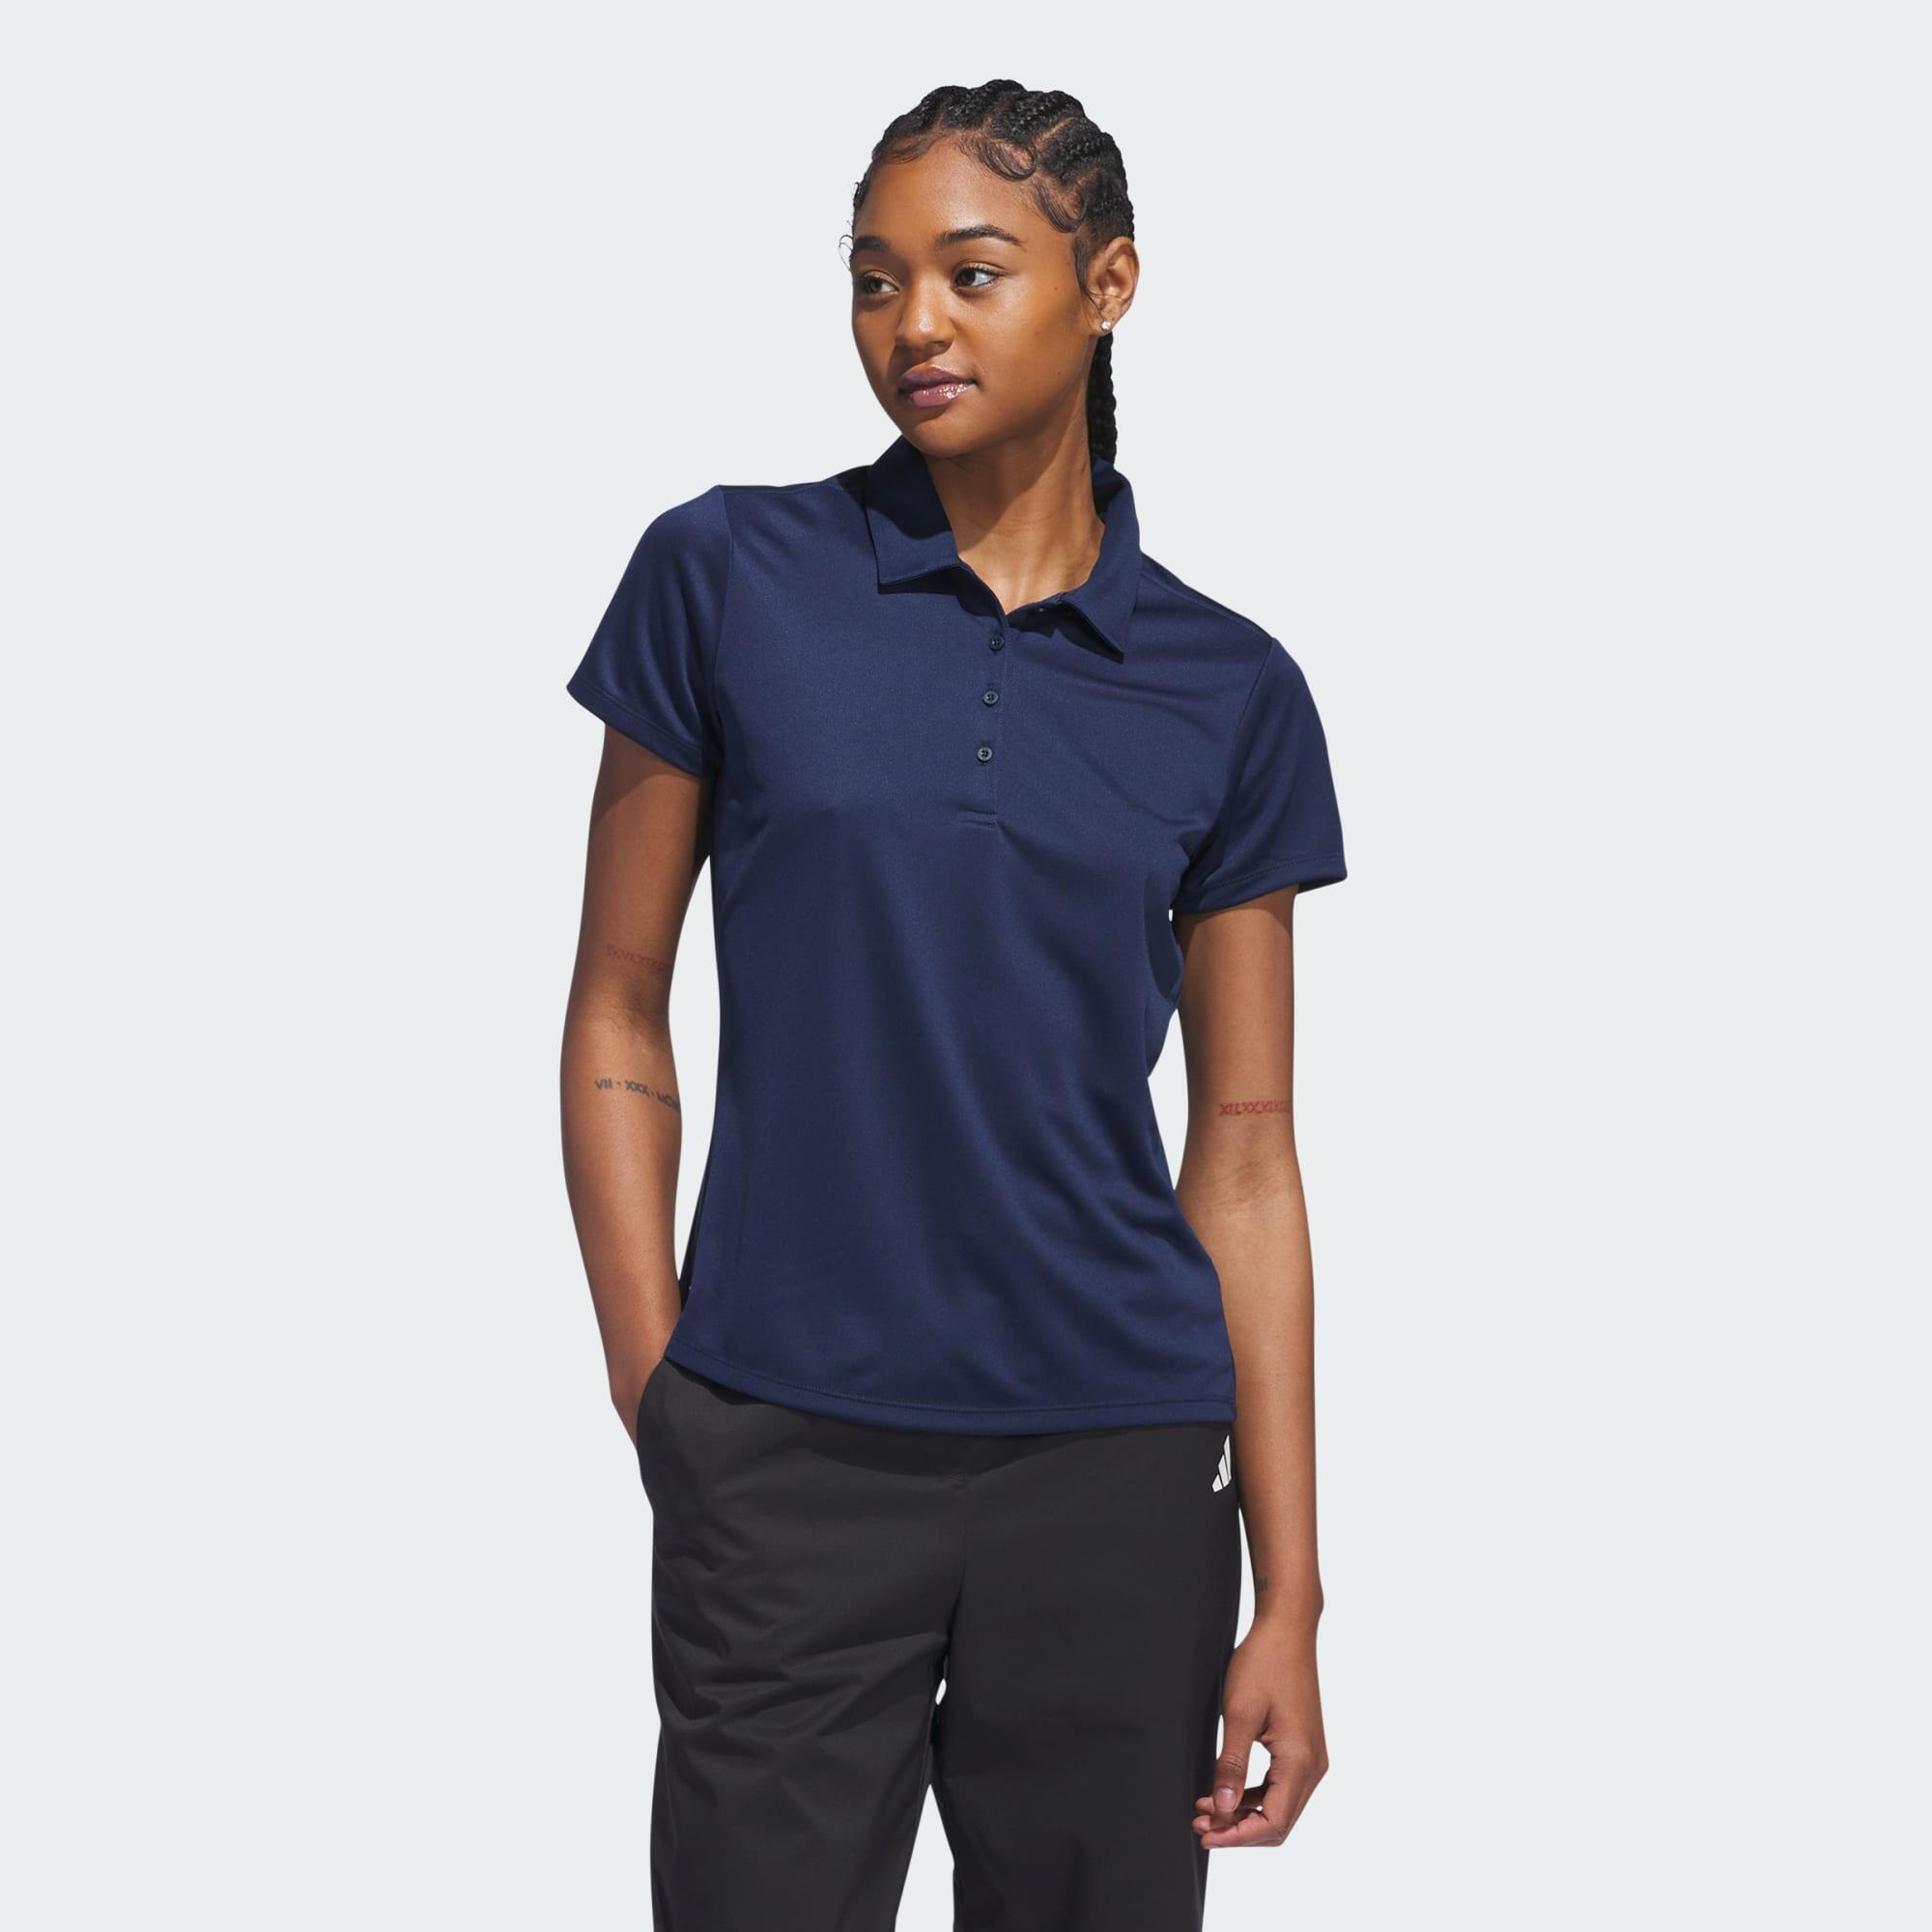 ADIDAS Women's Solid Performance Short Sleeve Polo Shirt